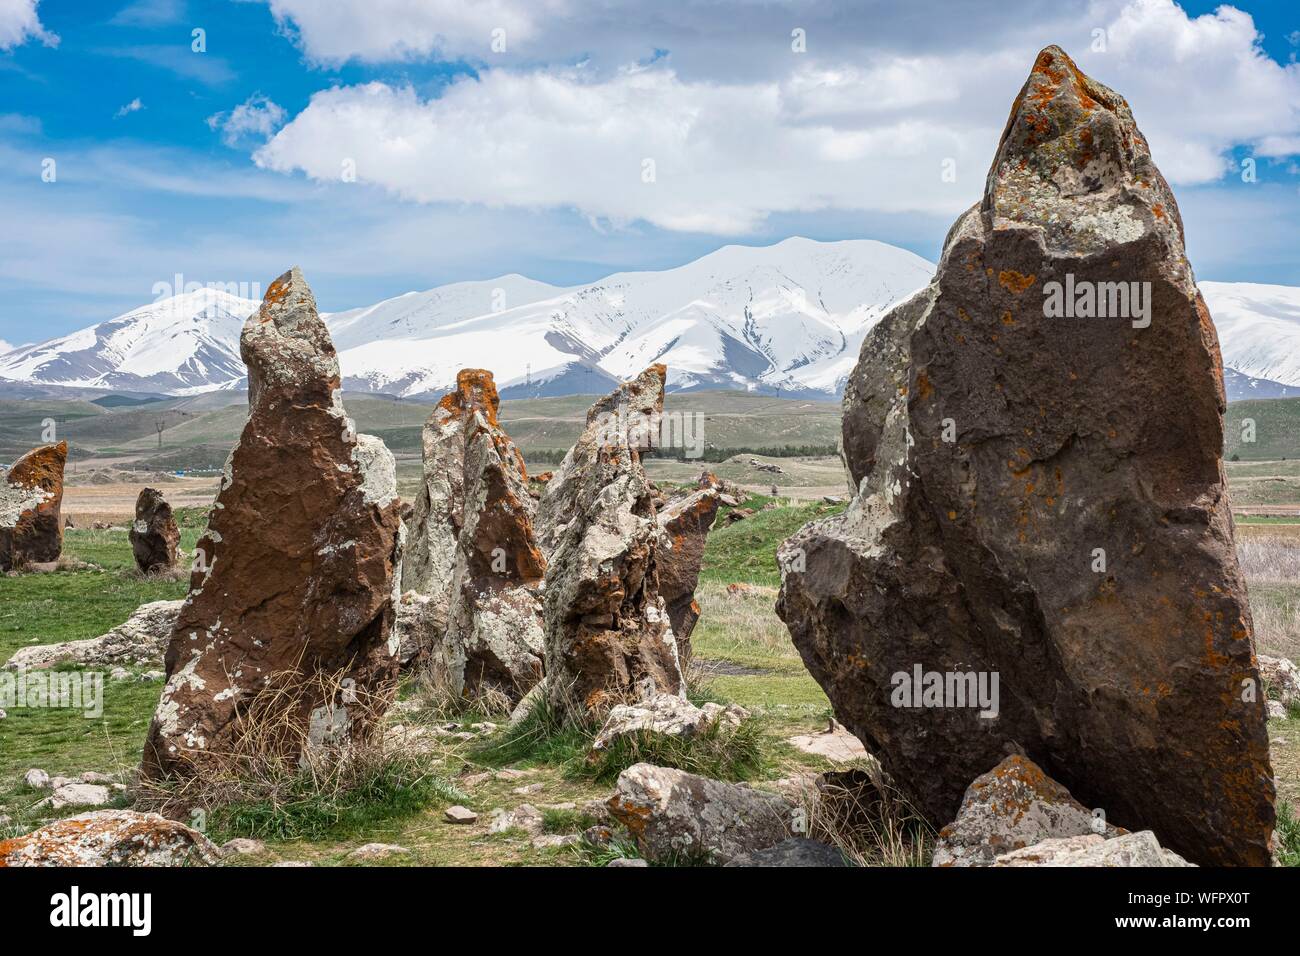 Armenia, Syunik región Sisian, sitio arqueológico prehistórico de Karahunj Zorats Karer (o) Foto de stock